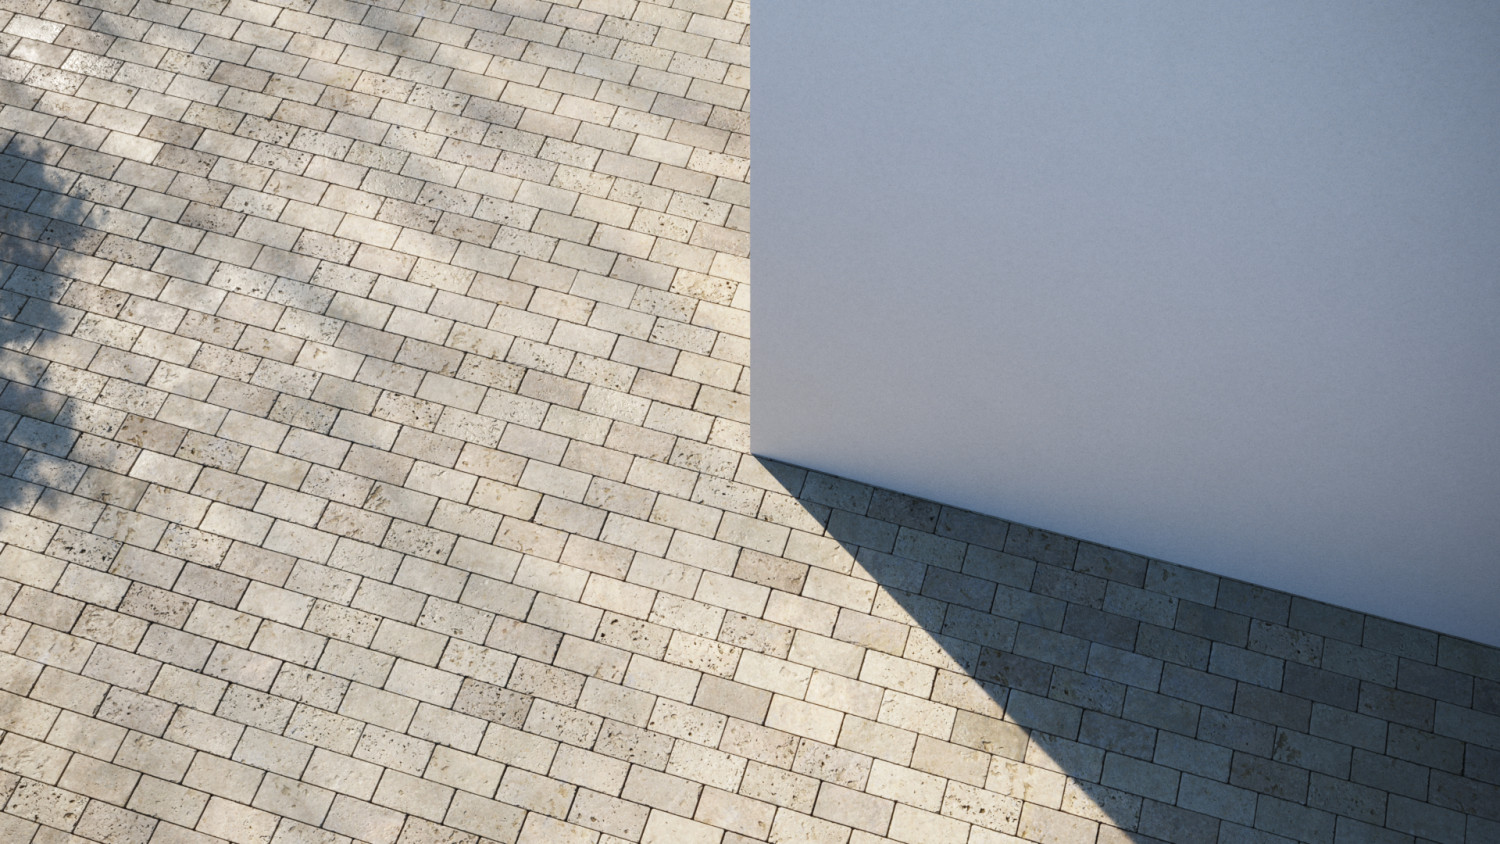 Travertine pavement texture